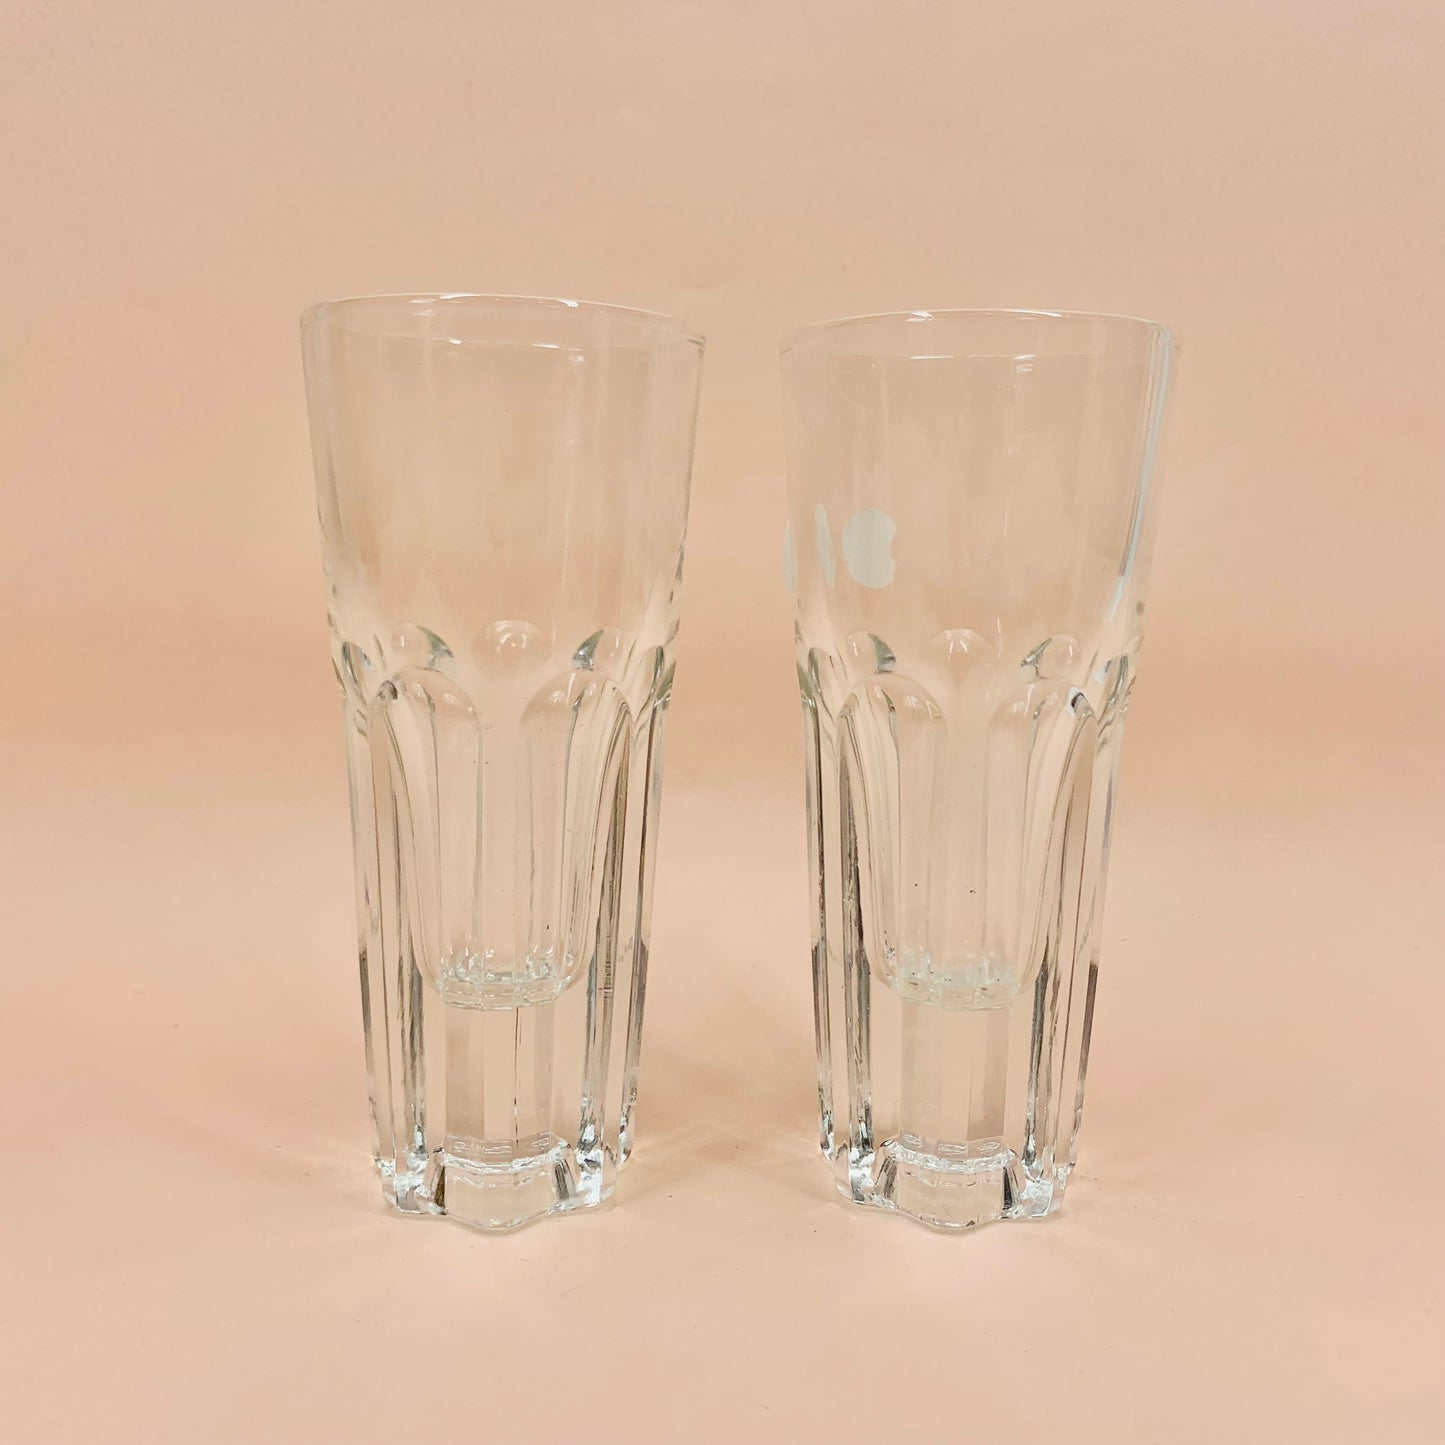 Vintage Italian twist faceted base water glasses